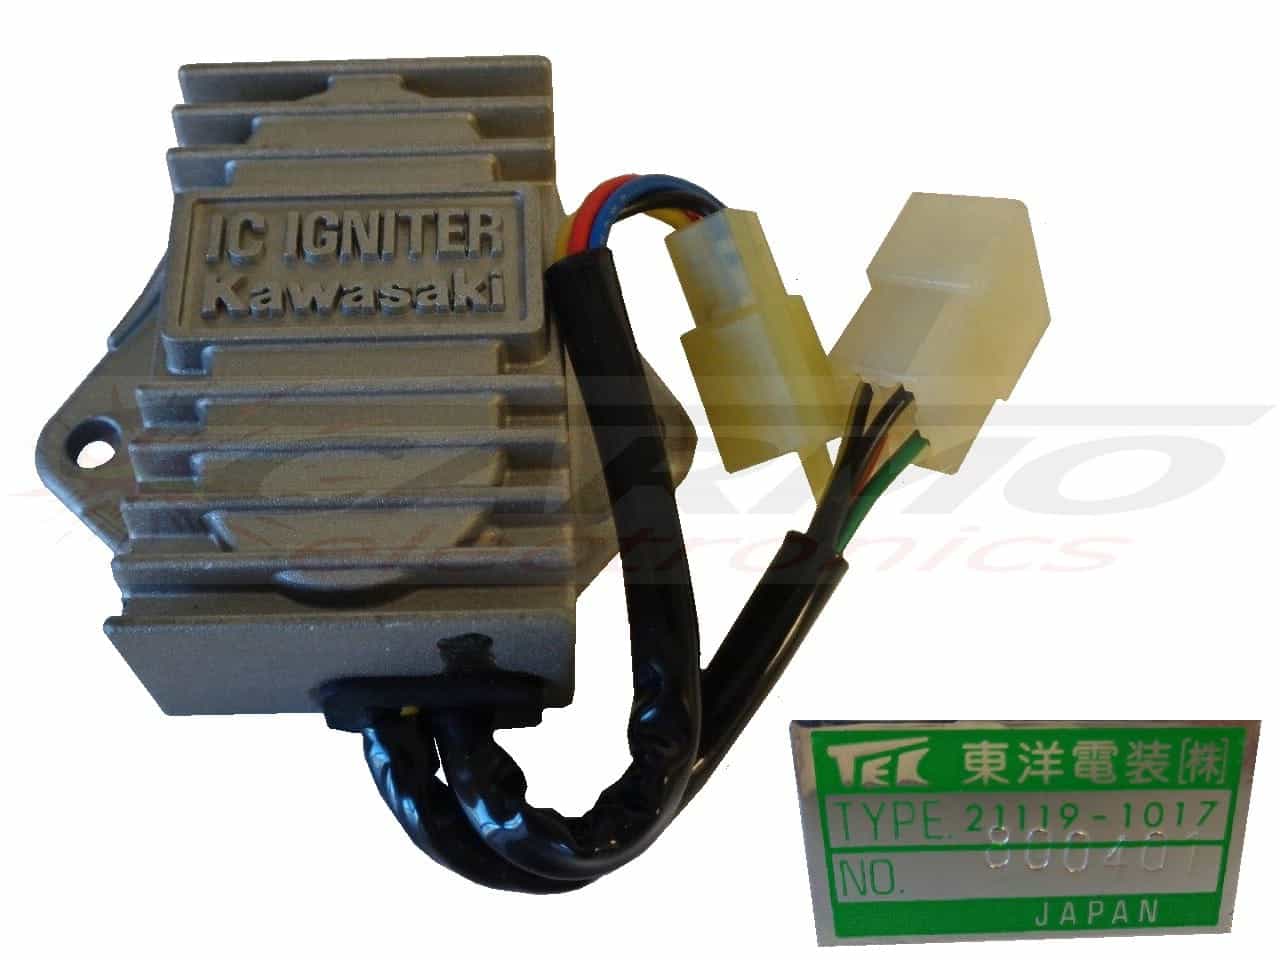 454 LTD (21119-1017) CDI ignitor ignition unit